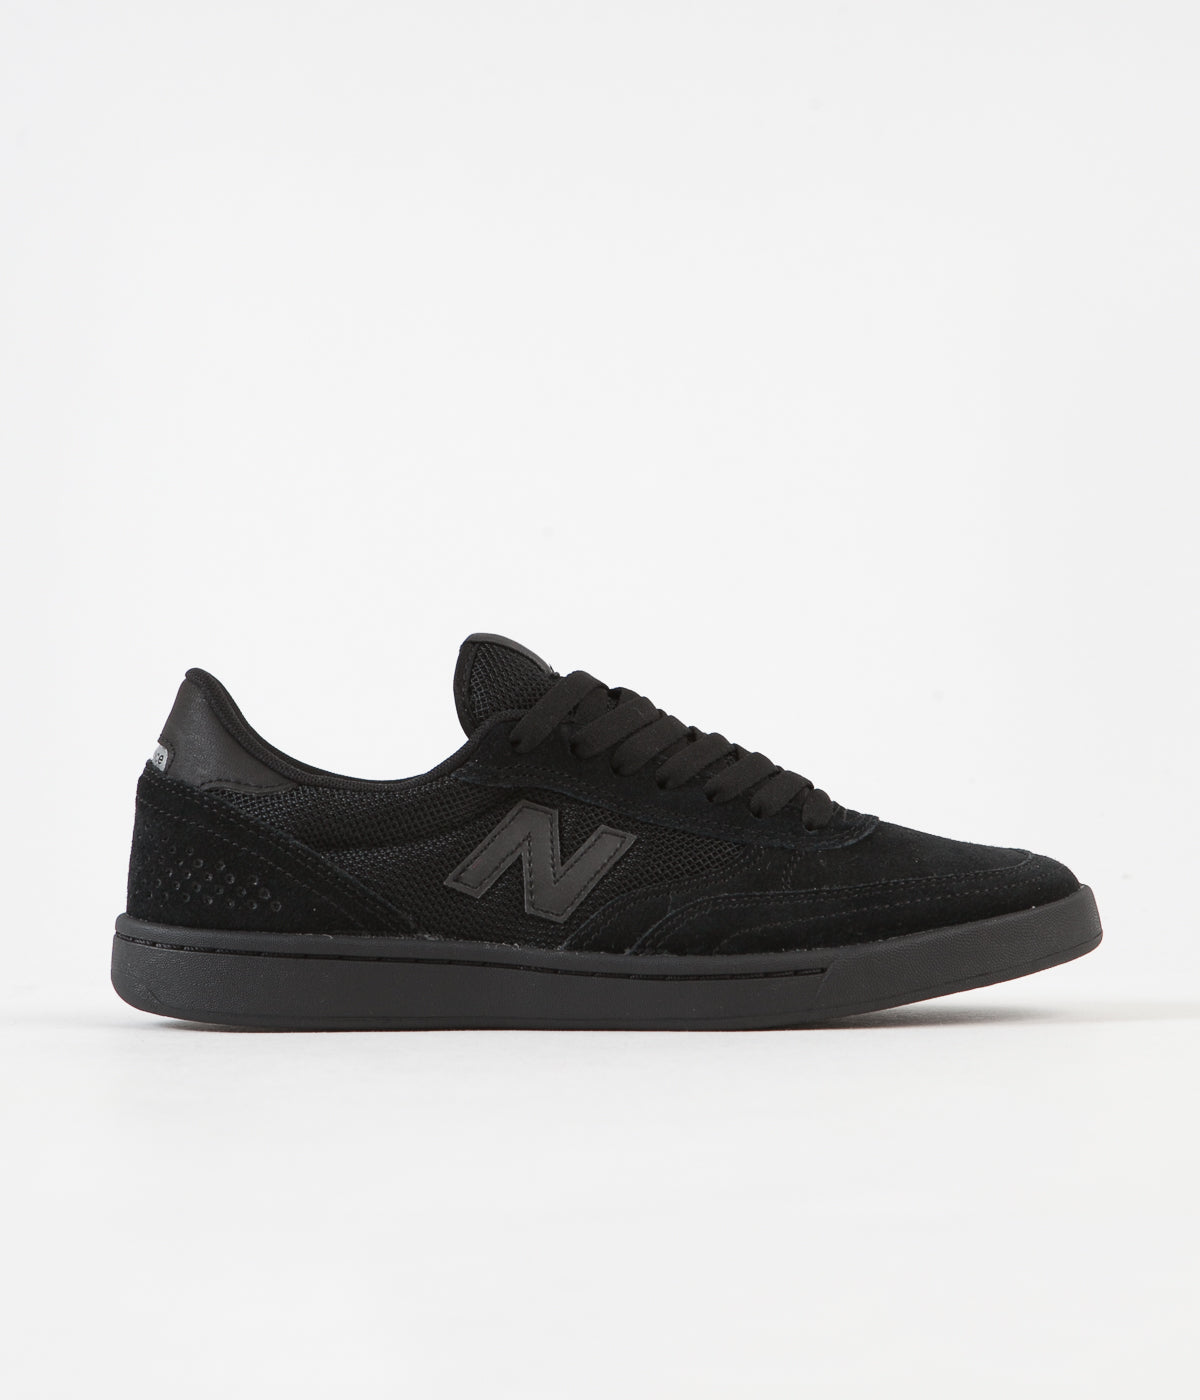 New Balance Numeric 440 Shoes - Black 